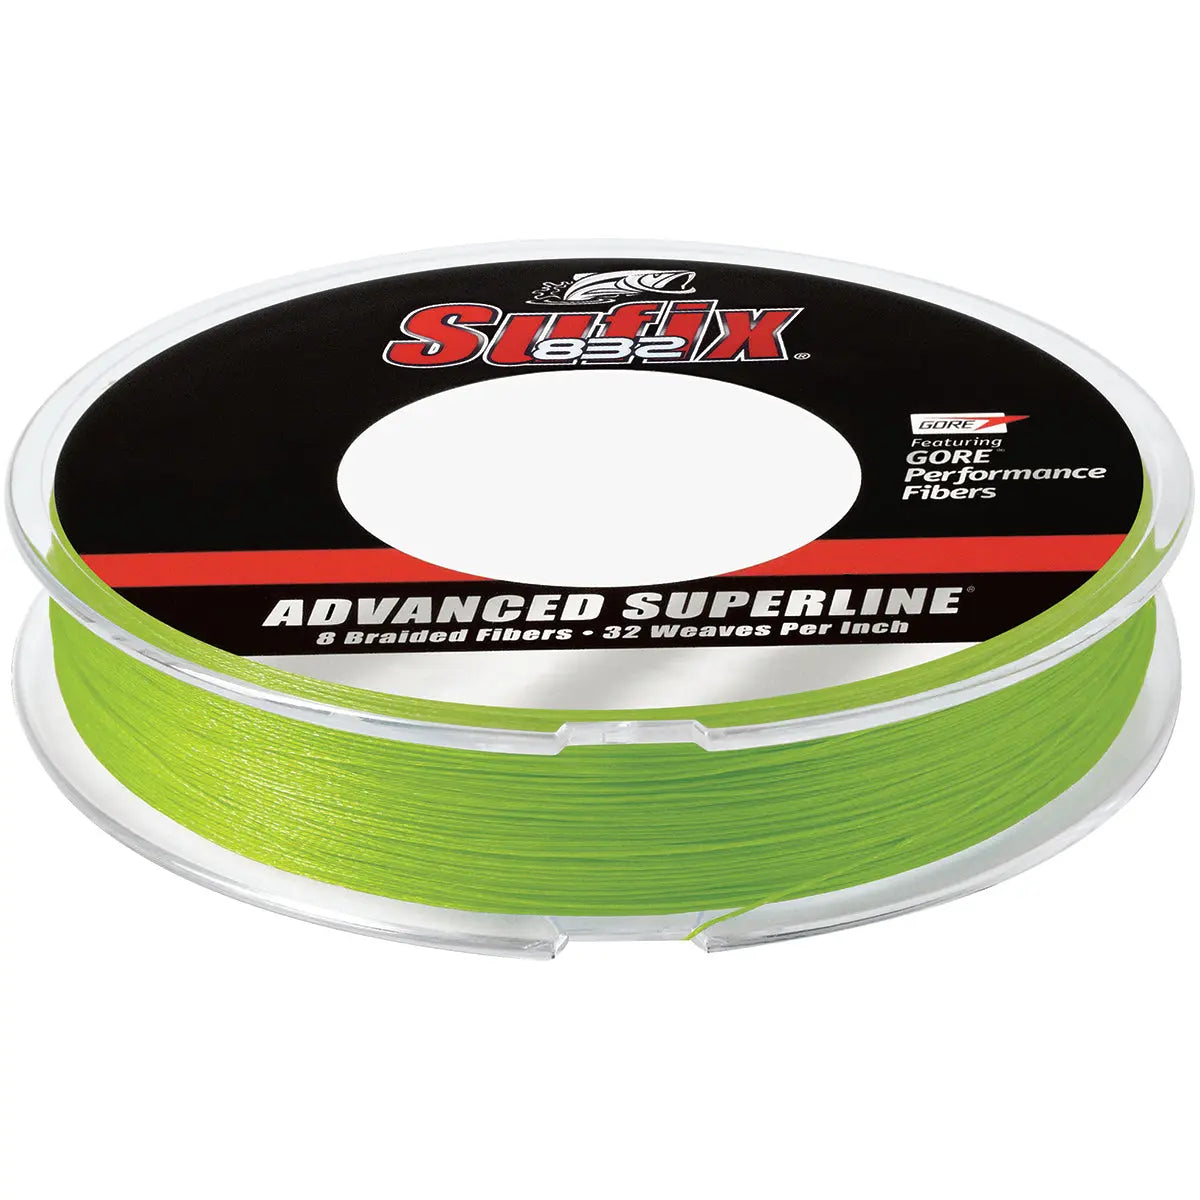 Sufix 150 Yard 832 Advanced Superline Braid Fishing Line - 10 lb. - Neon Lime Sufix